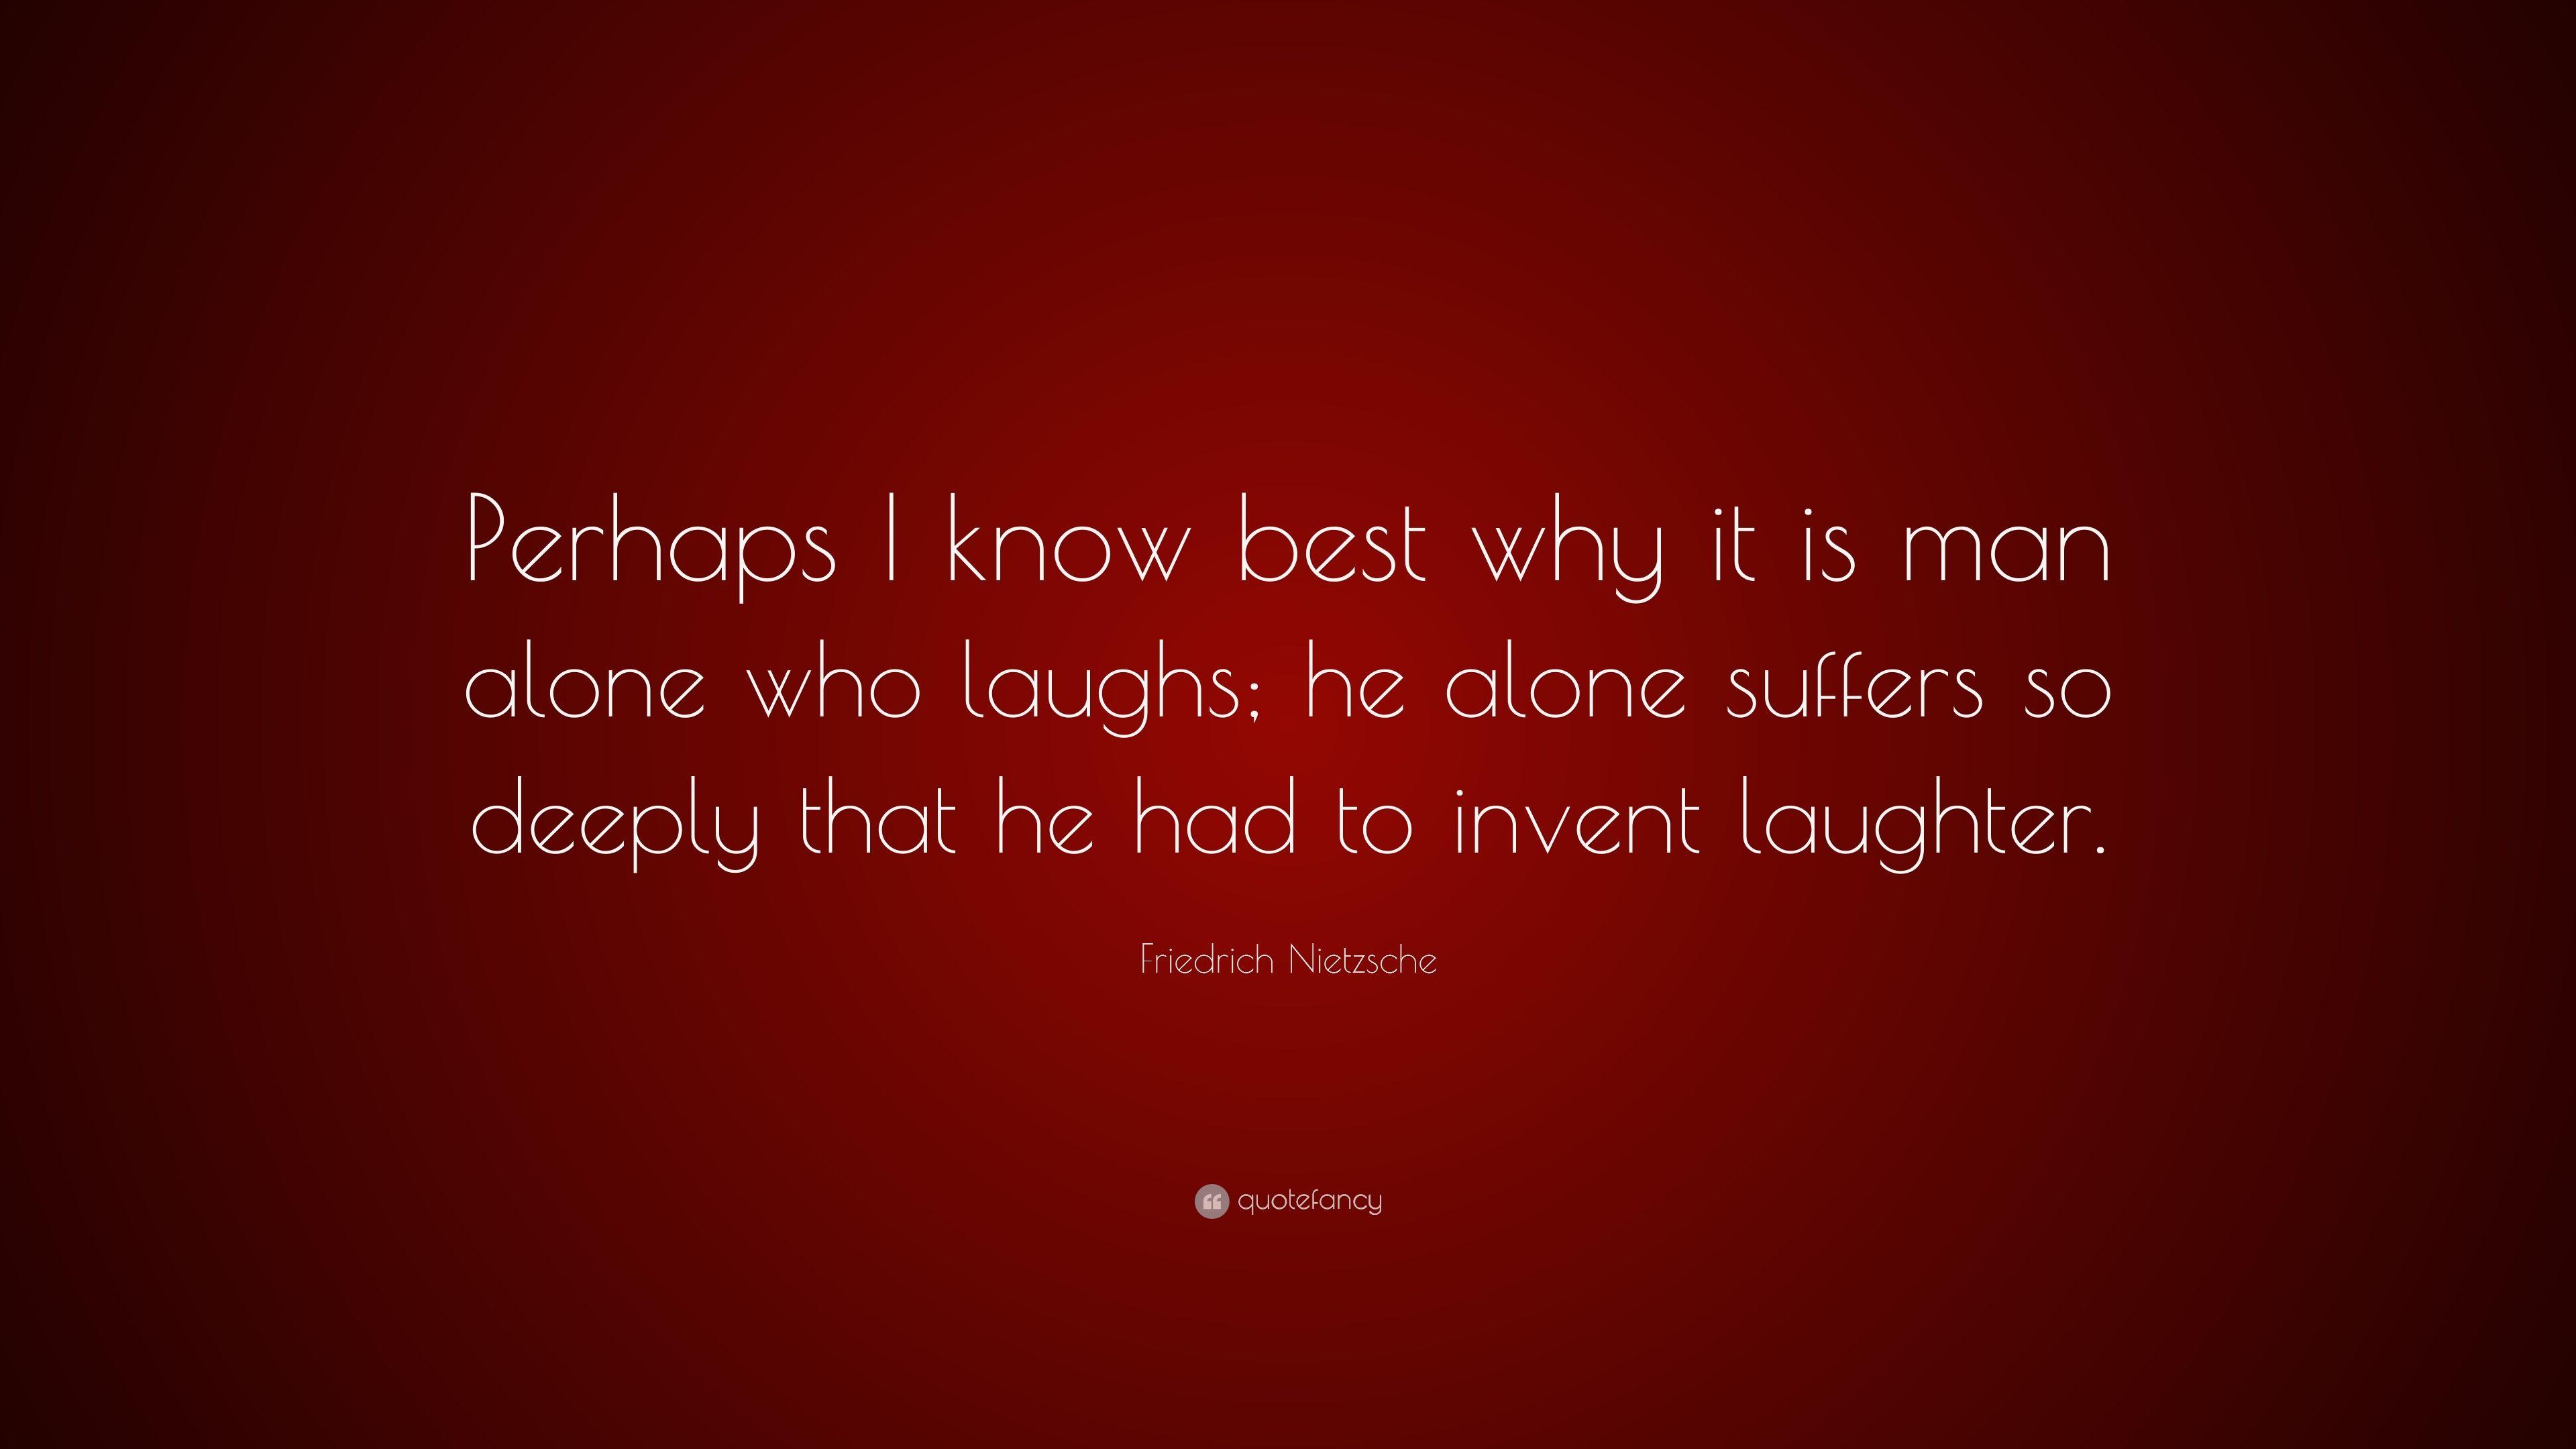 Friedrich Nietzsche Quote: “Perhaps I know best why it is man